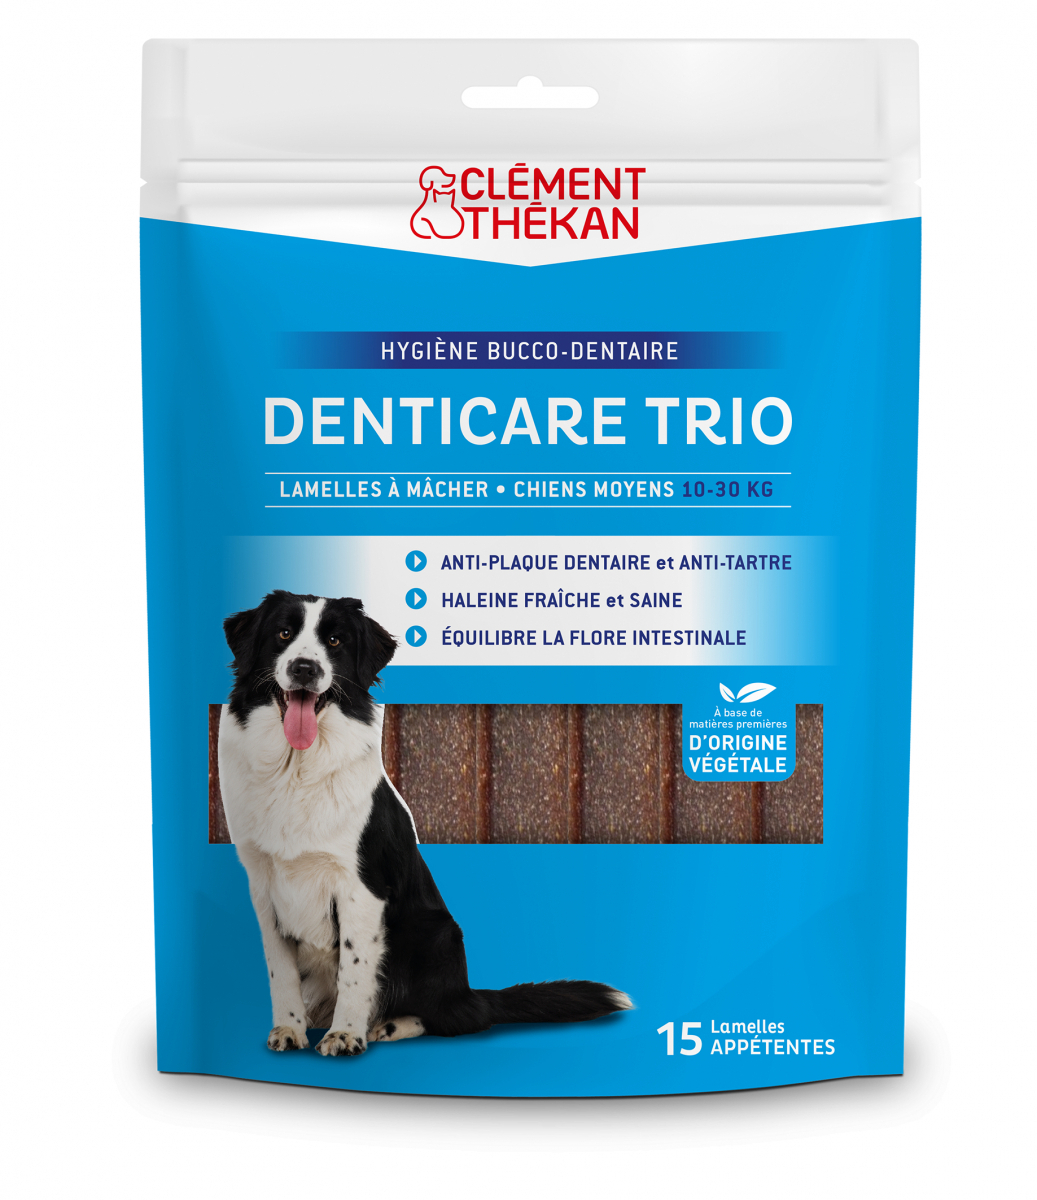 Clément Thékan Denticare Trio Lamelle da masticare per cane